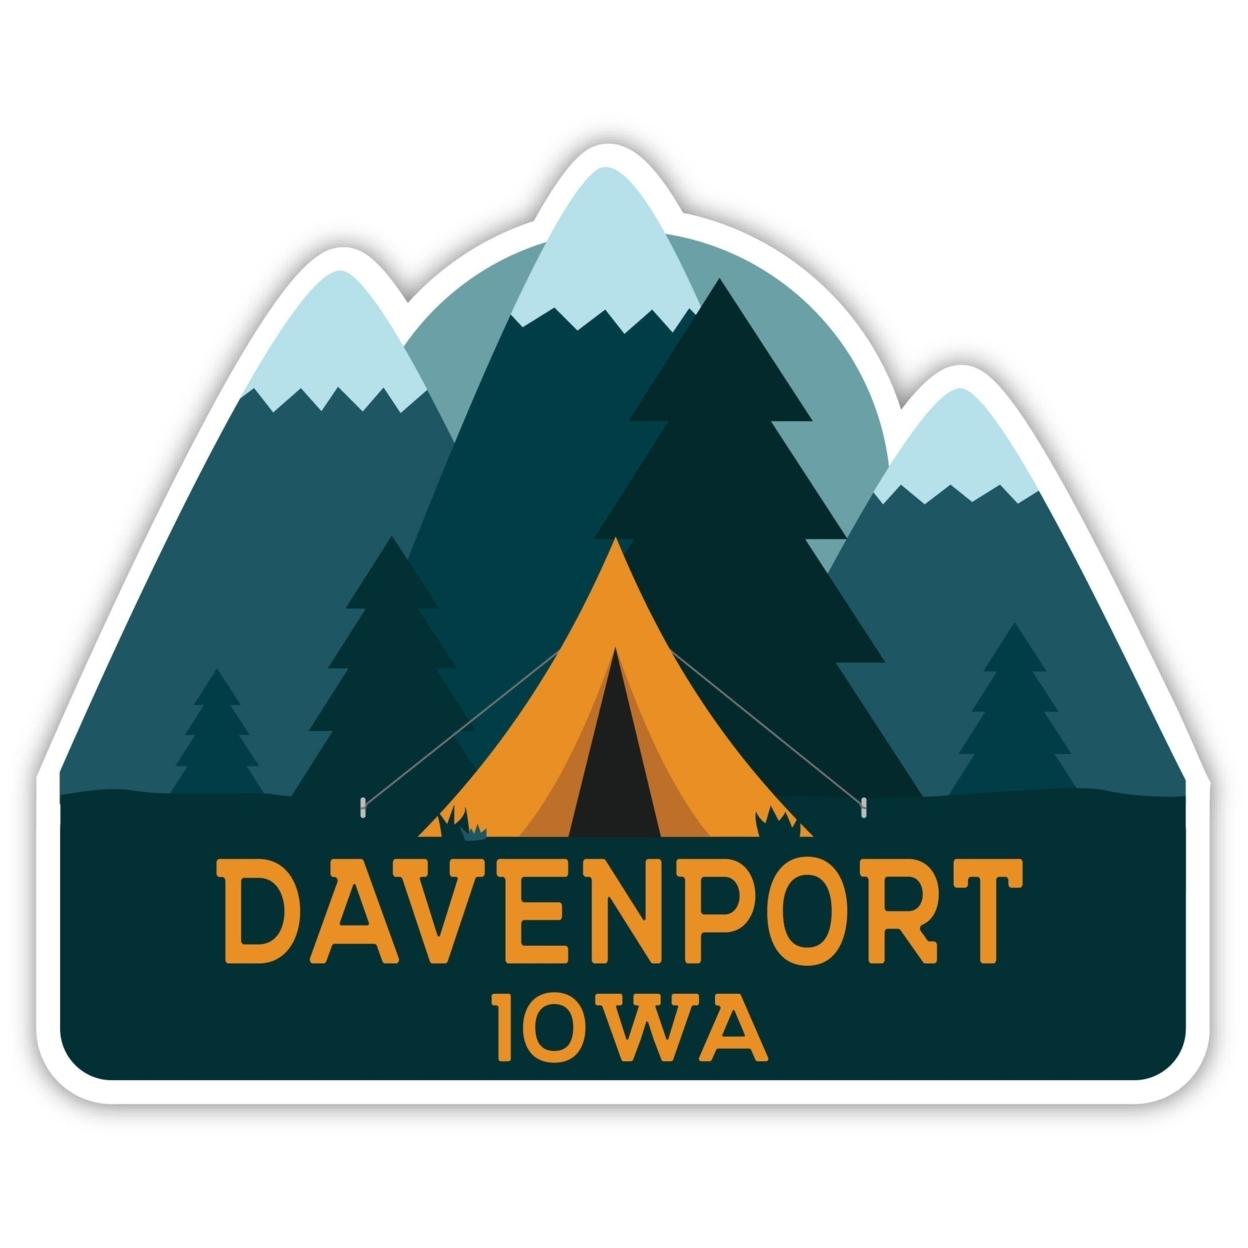 Davenport Iowa Souvenir Decorative Stickers (Choose Theme And Size) - 4-Pack, 6-Inch, Adventures Awaits